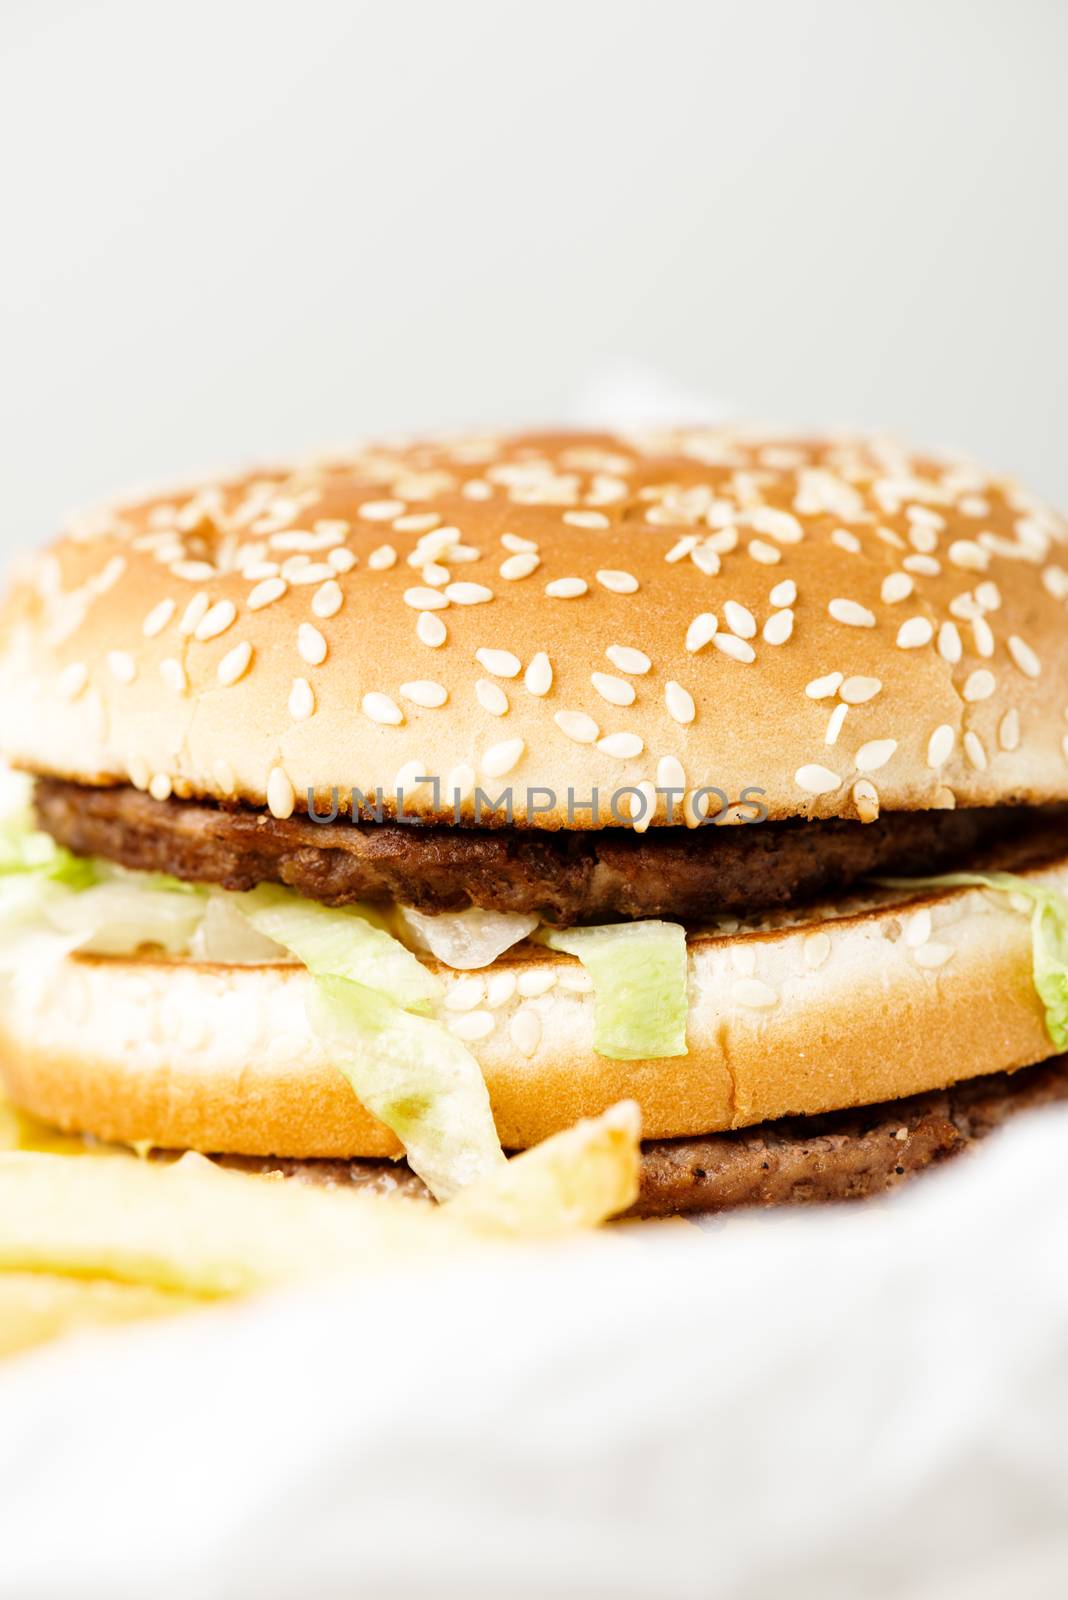 Double burger from McDonalds by Nanisimova